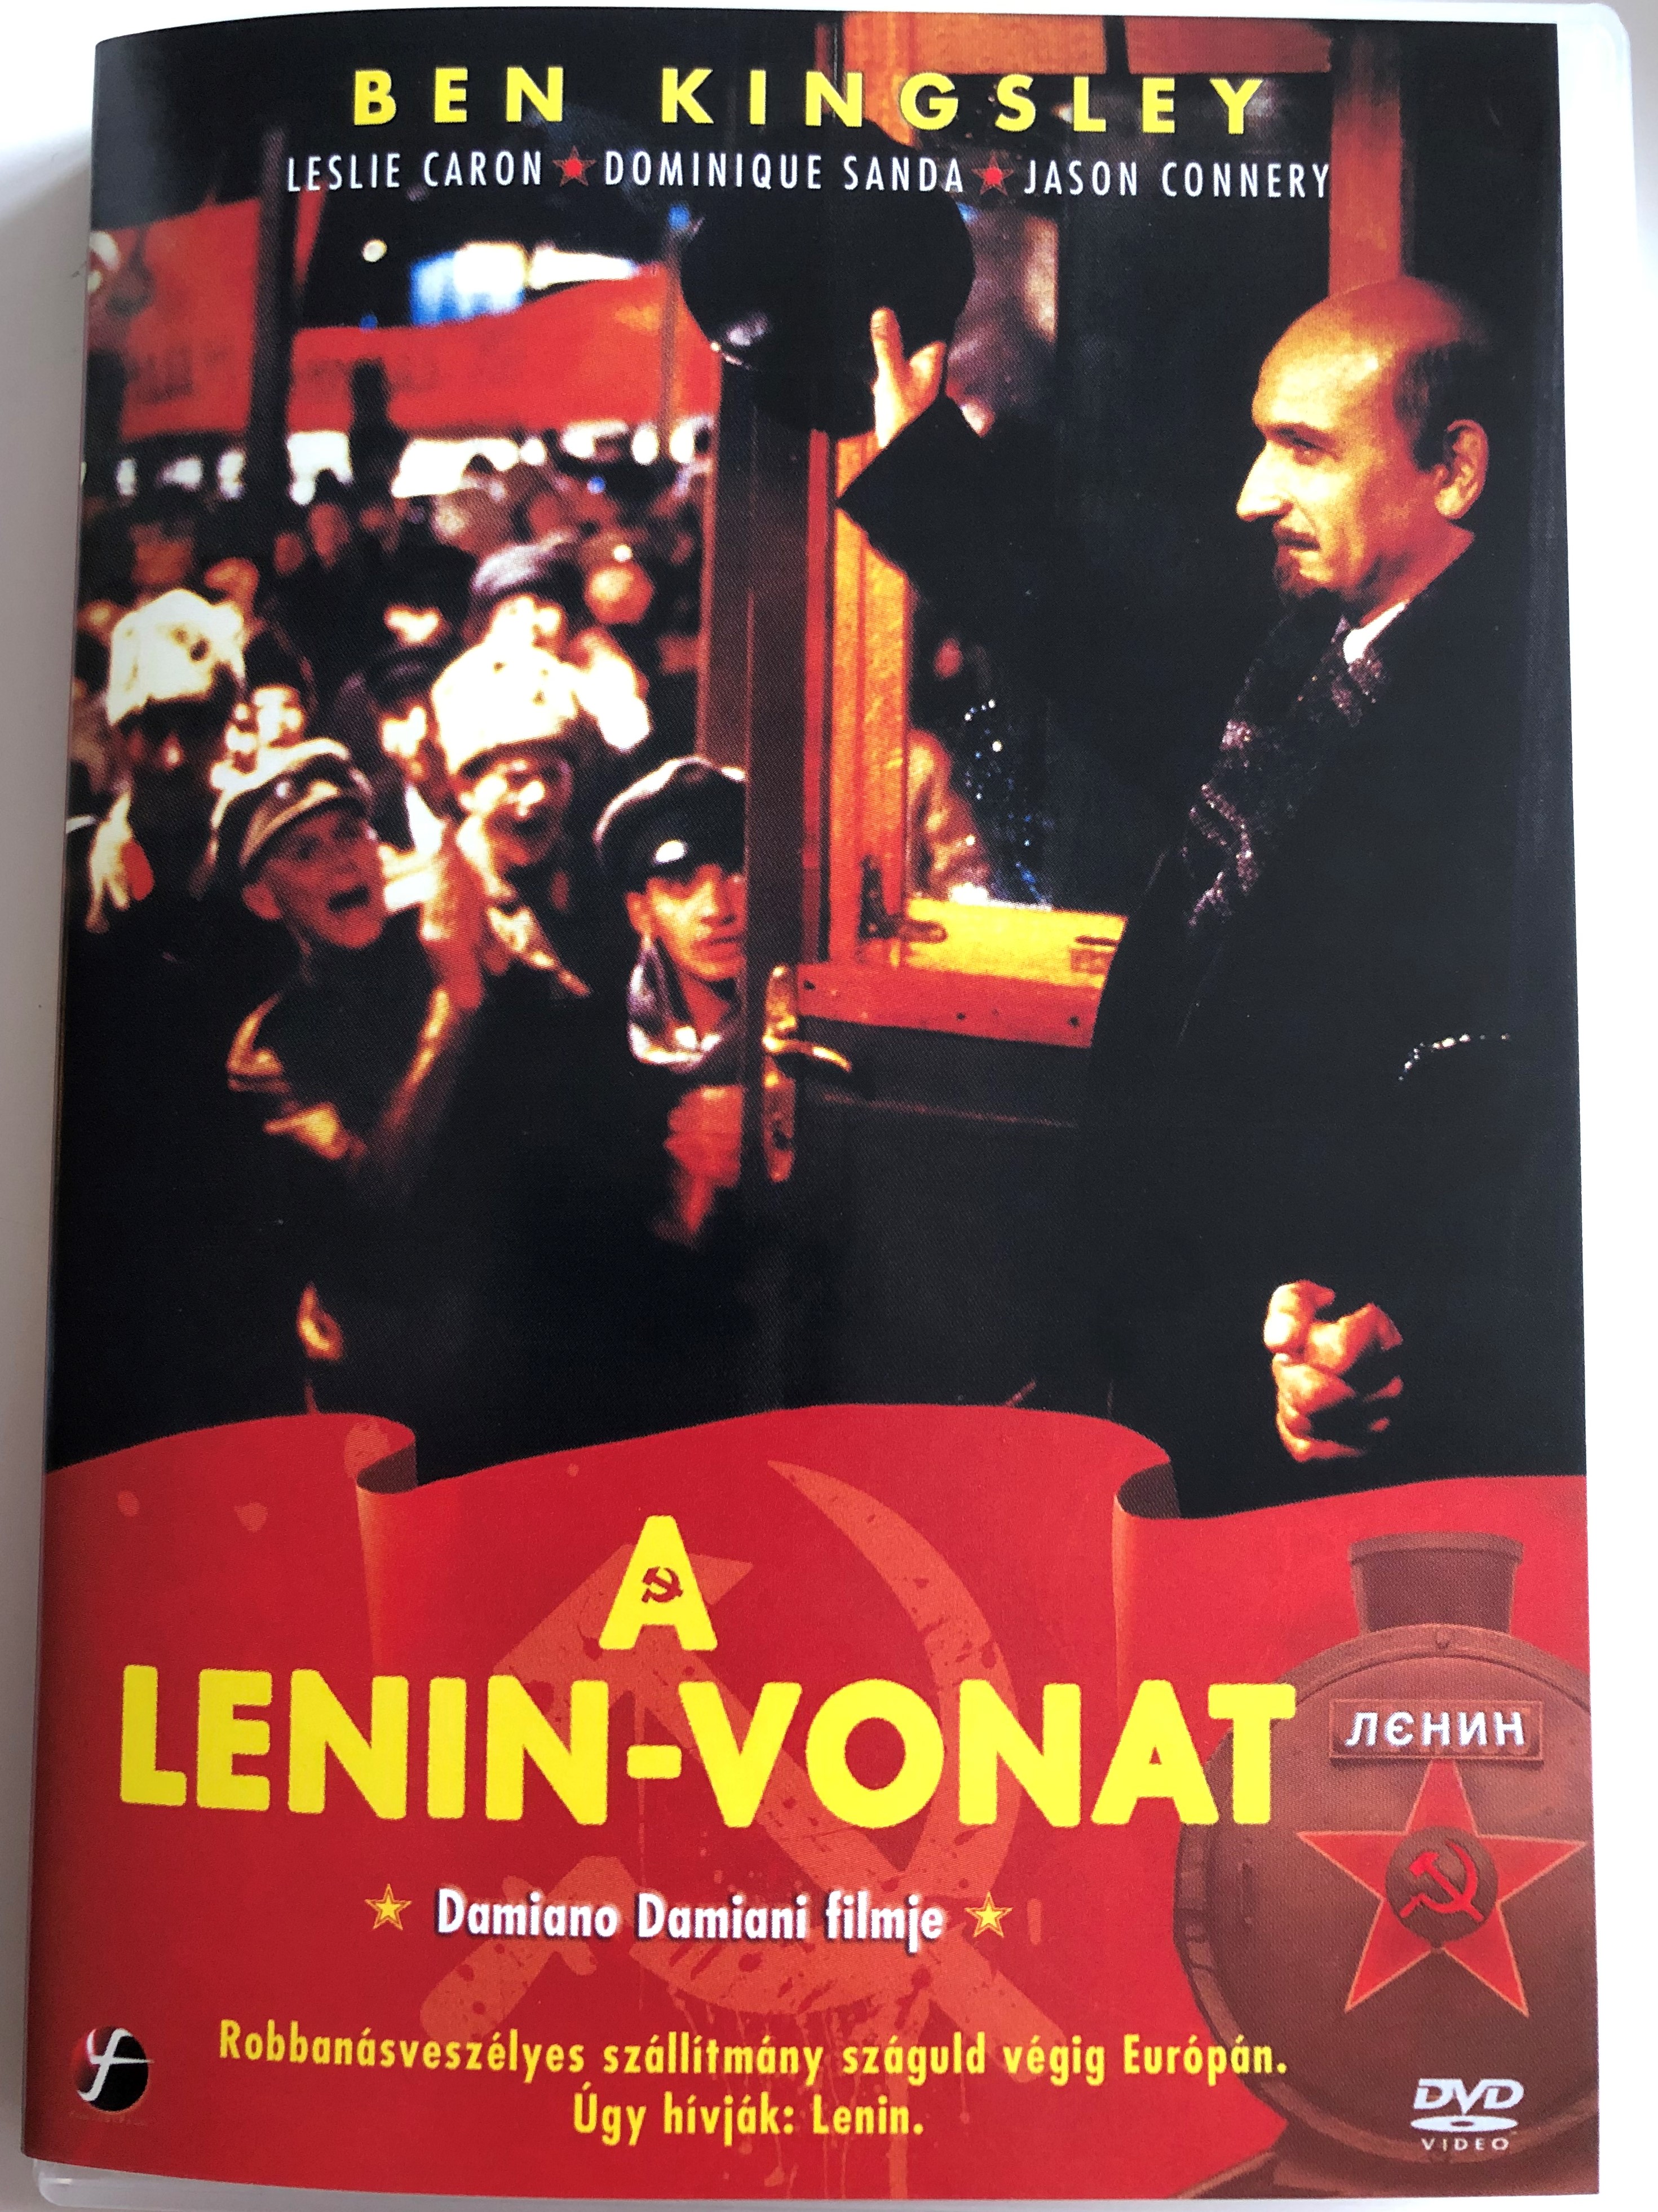 lenin-the-train-dvd-1990-a-lenin-vonat-directed-by-damiano-damiani-1.jpg